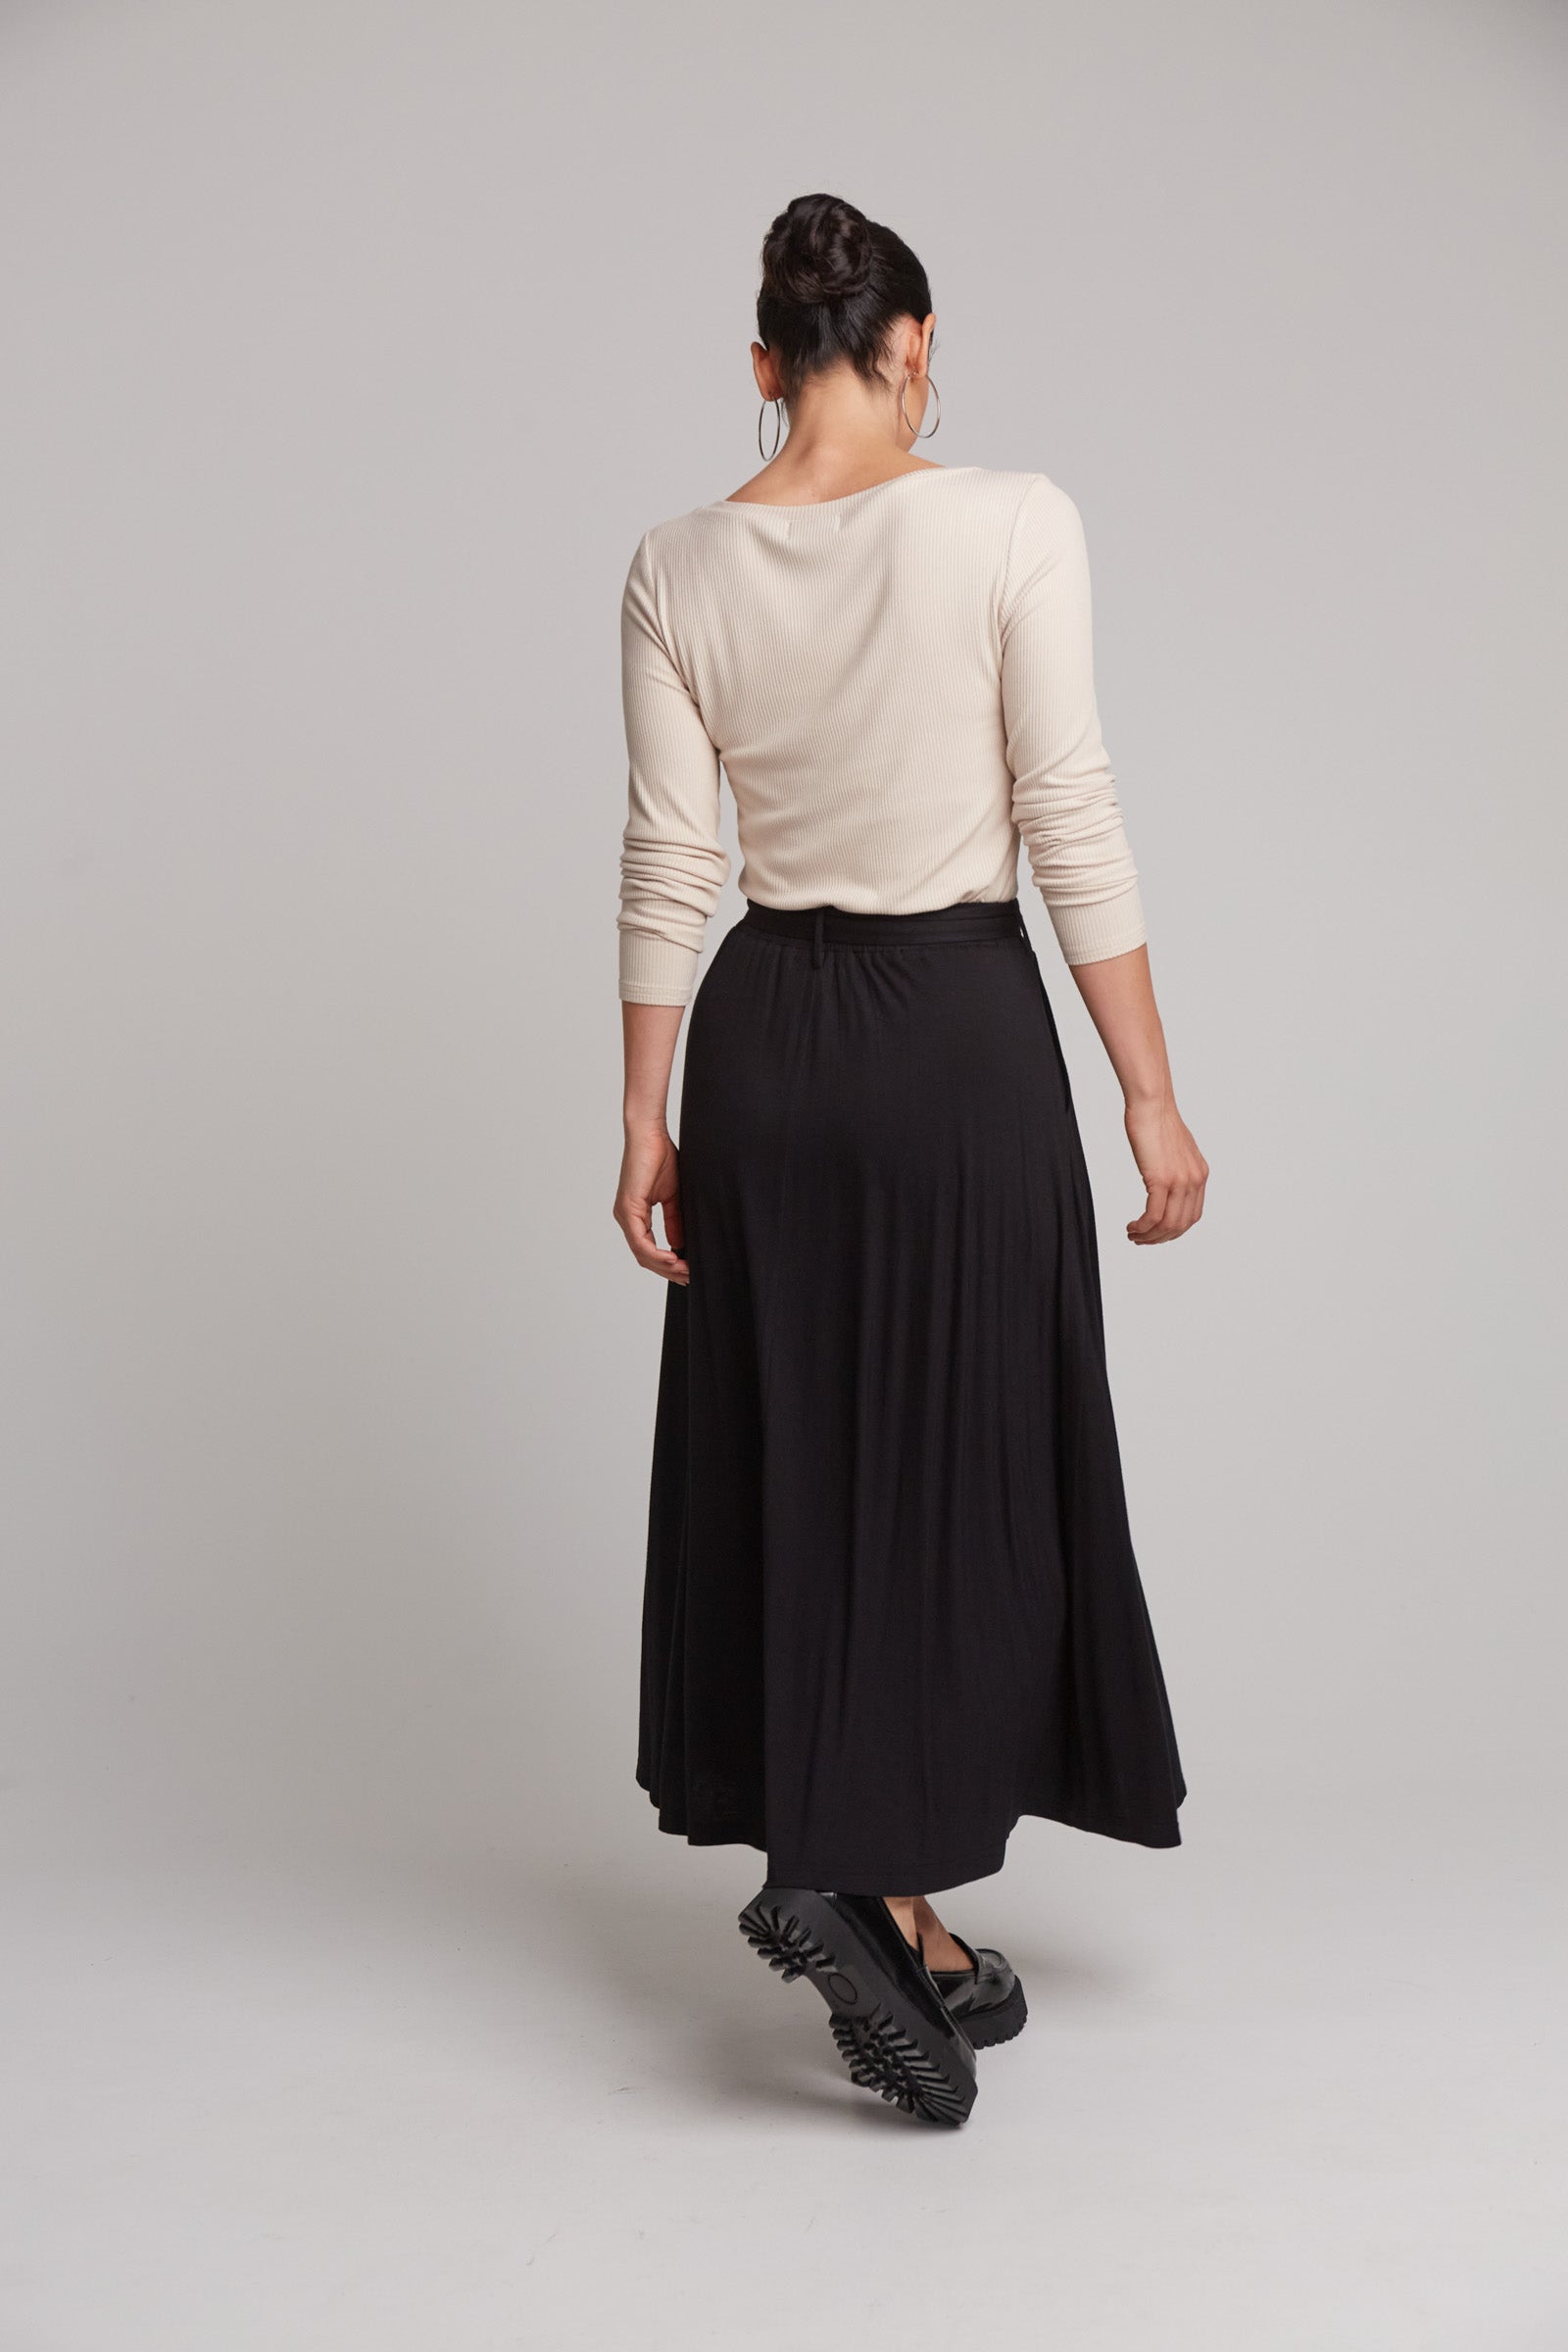 Studio Jersey Tie Skirt - Ebony - eb&ive Clothing - Skirt Maxi